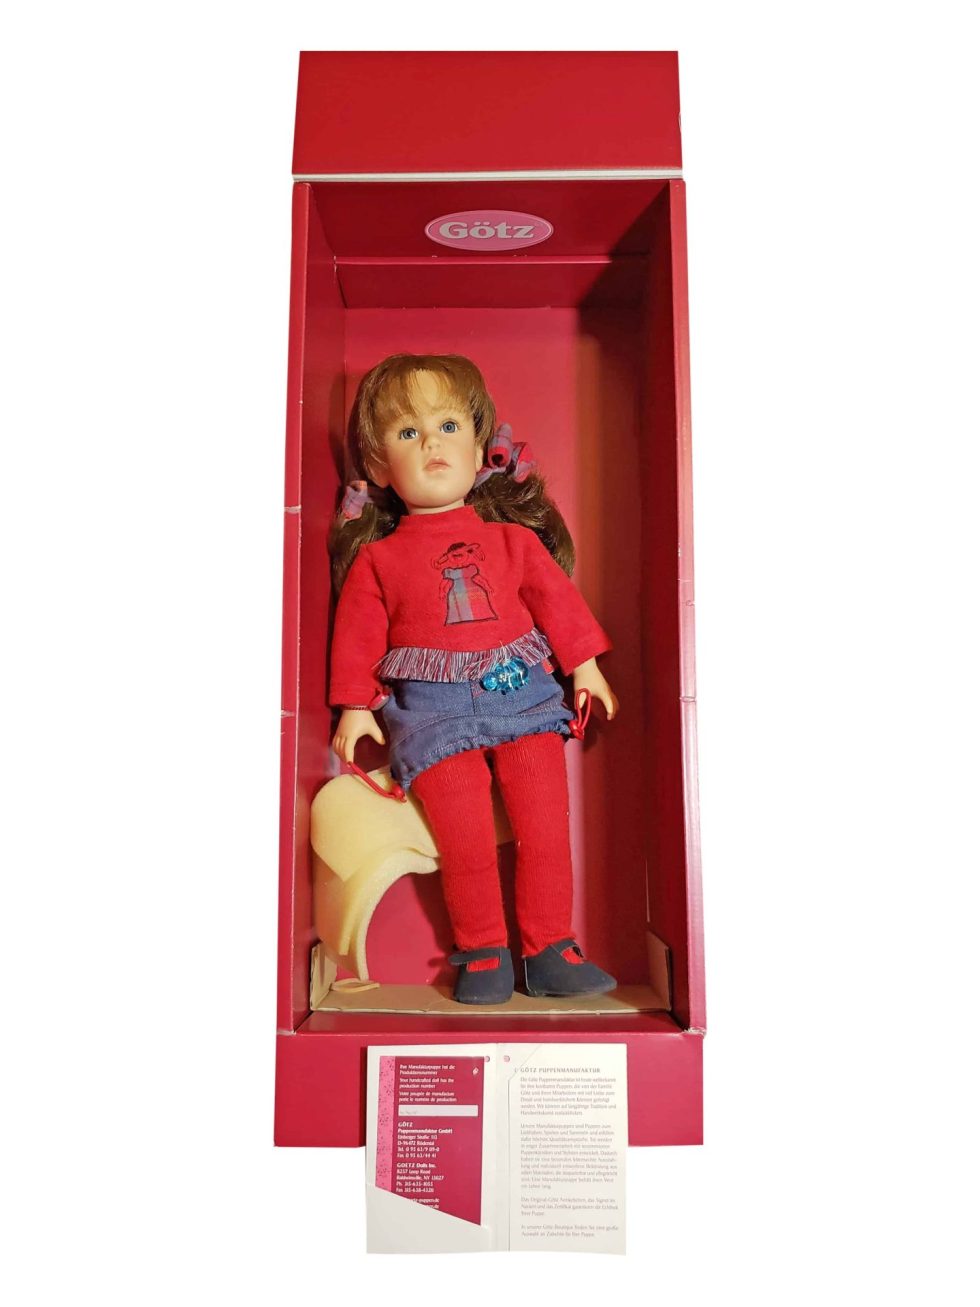 Lot #12341 – Gotz Puppenmanufaktur Doll Nathalie With Box Art Toys Gotz